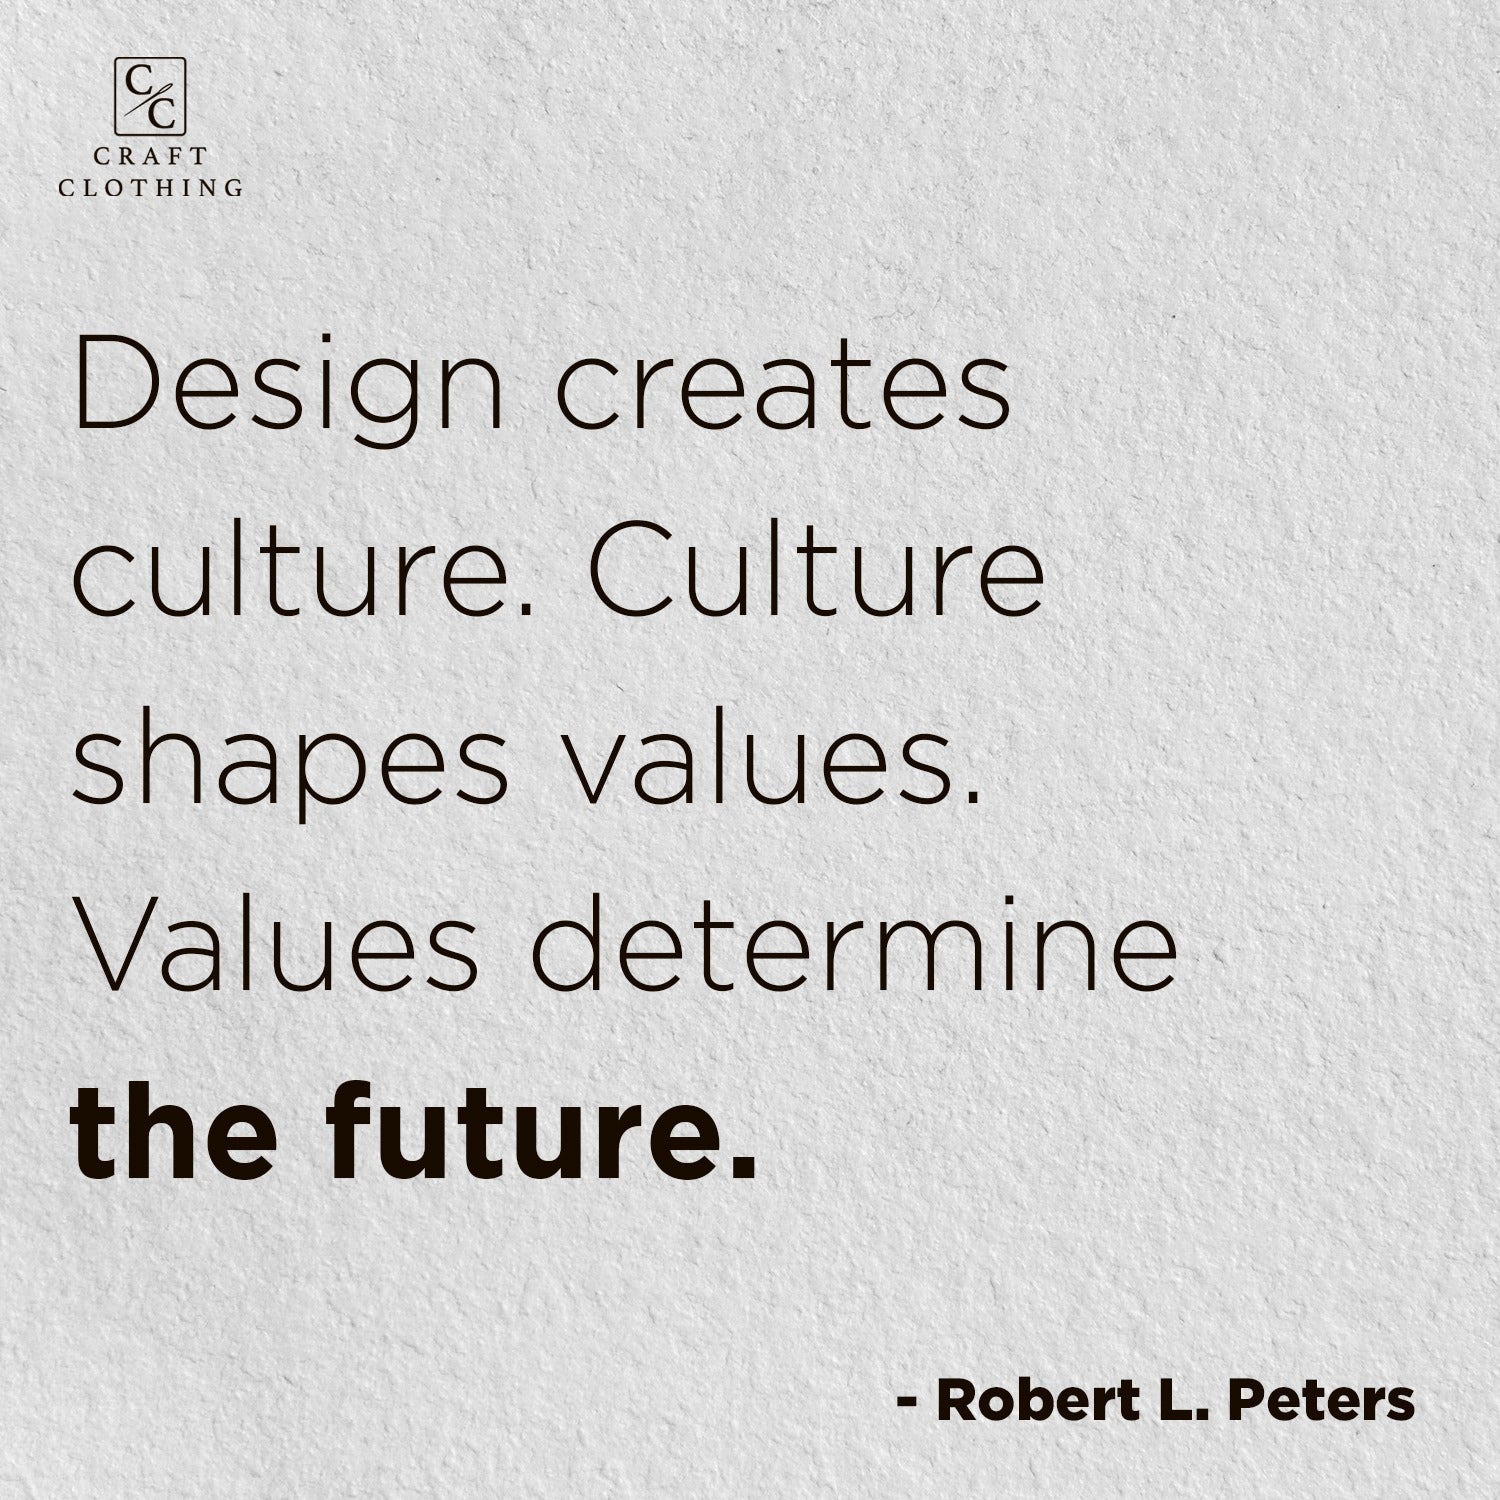 Design creates culture. Culture shapes values. Values determine the future.